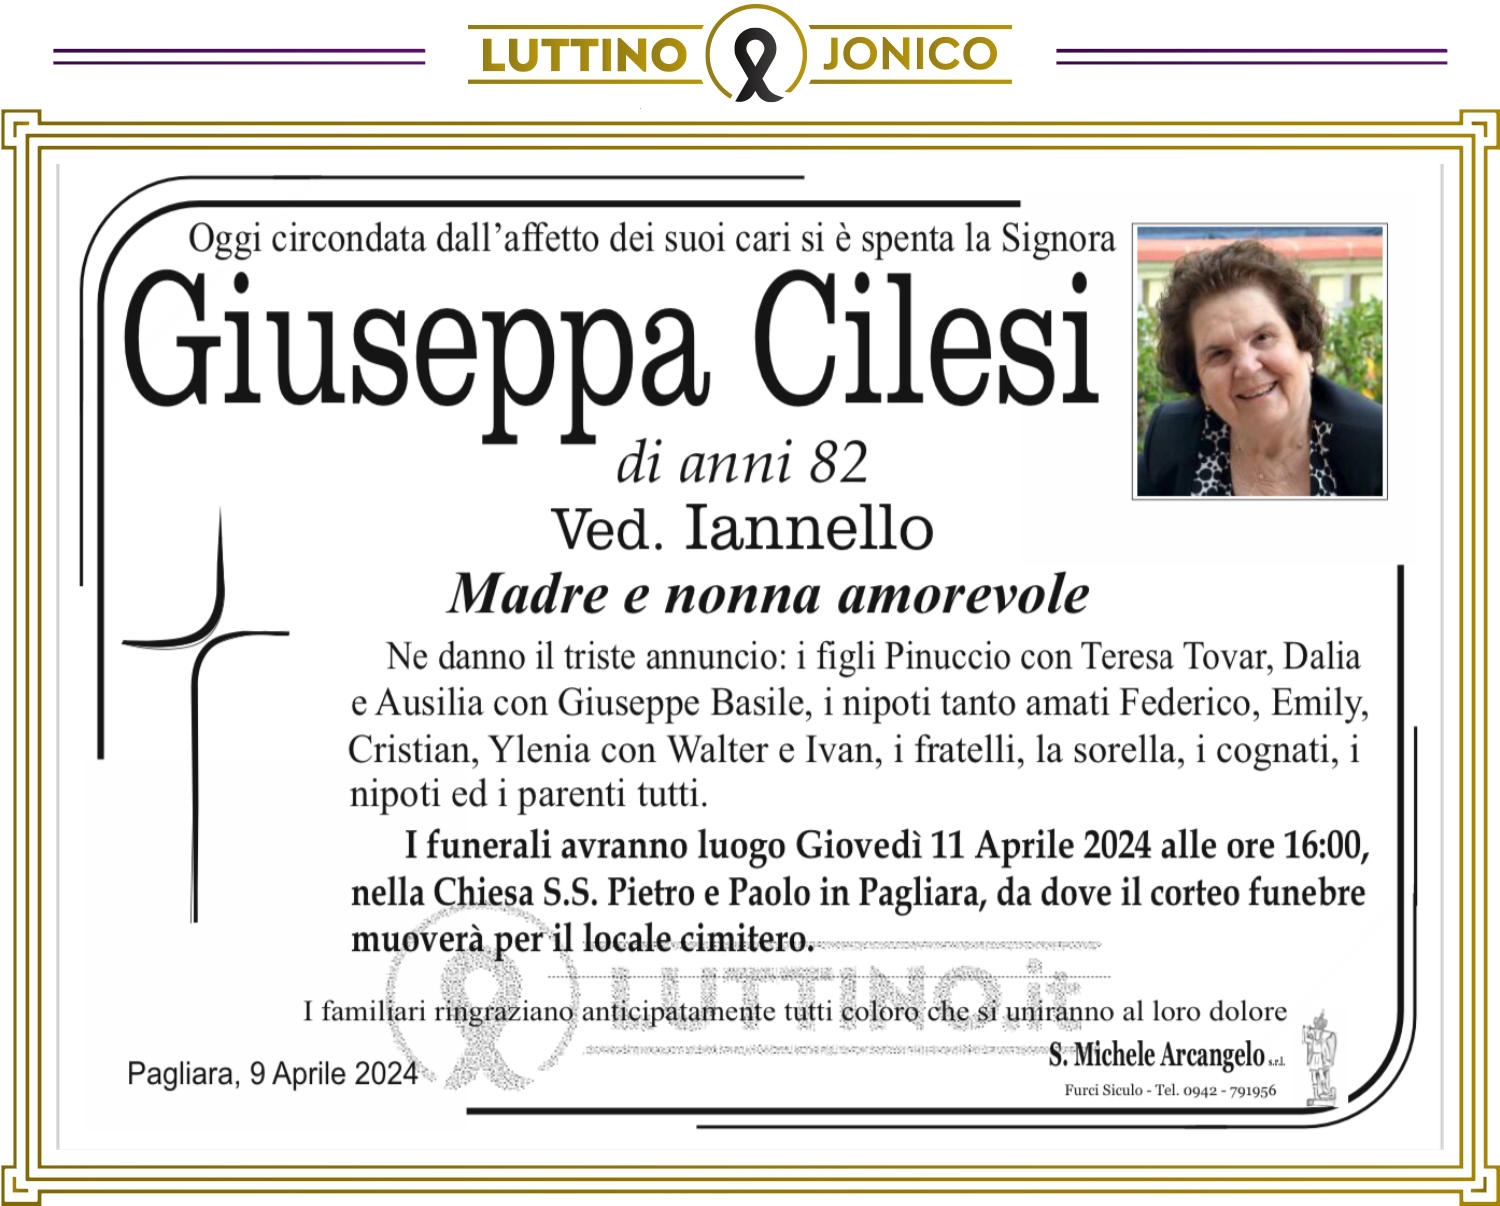 Giuseppa Cilesi